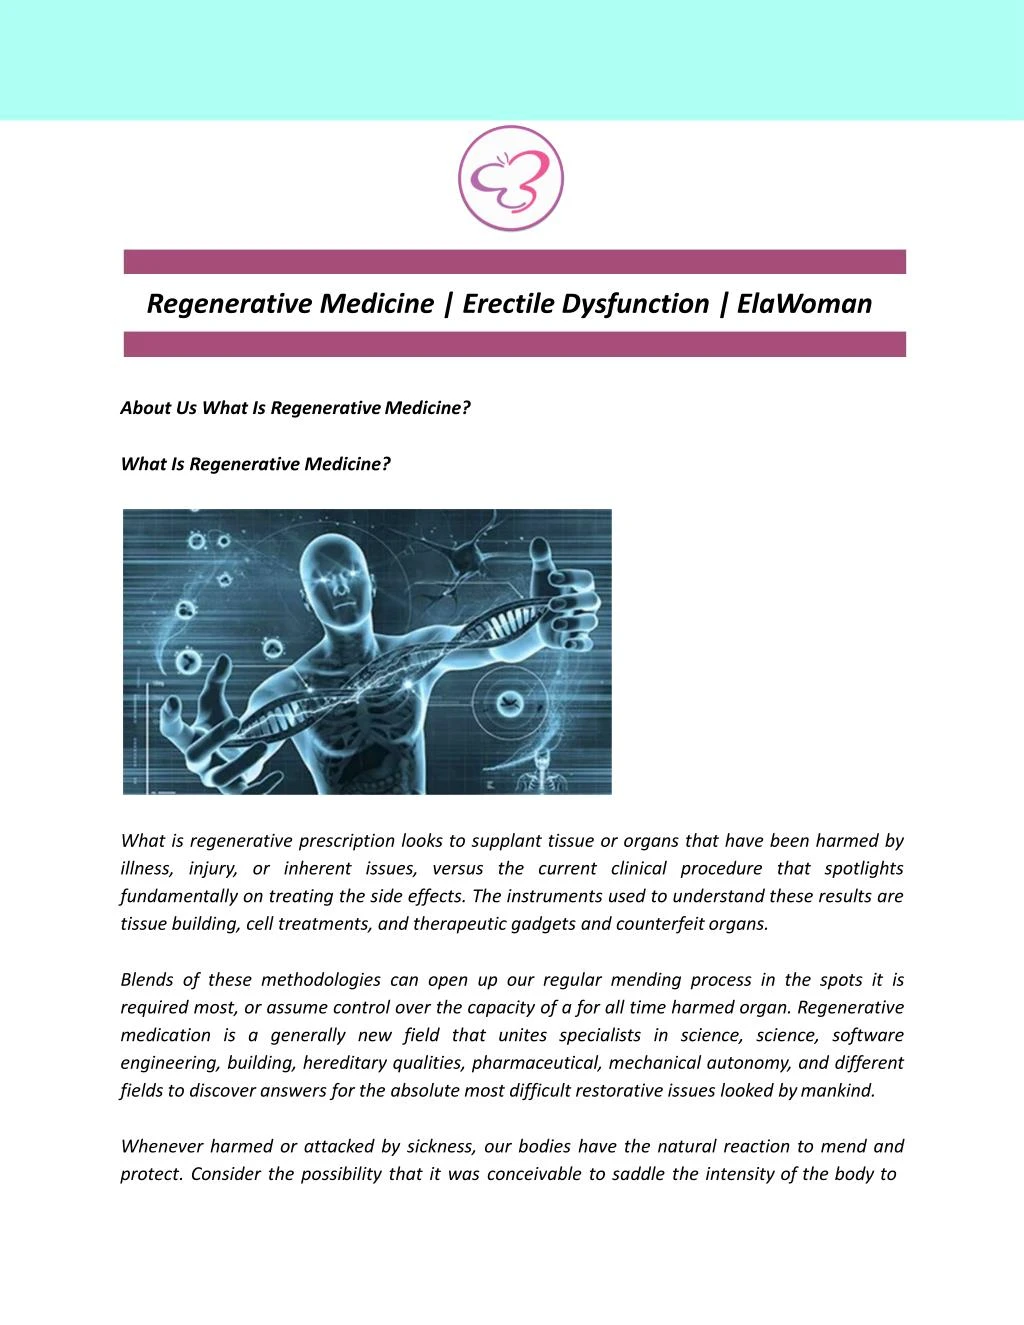 regenerative medicine erectile dysfunction